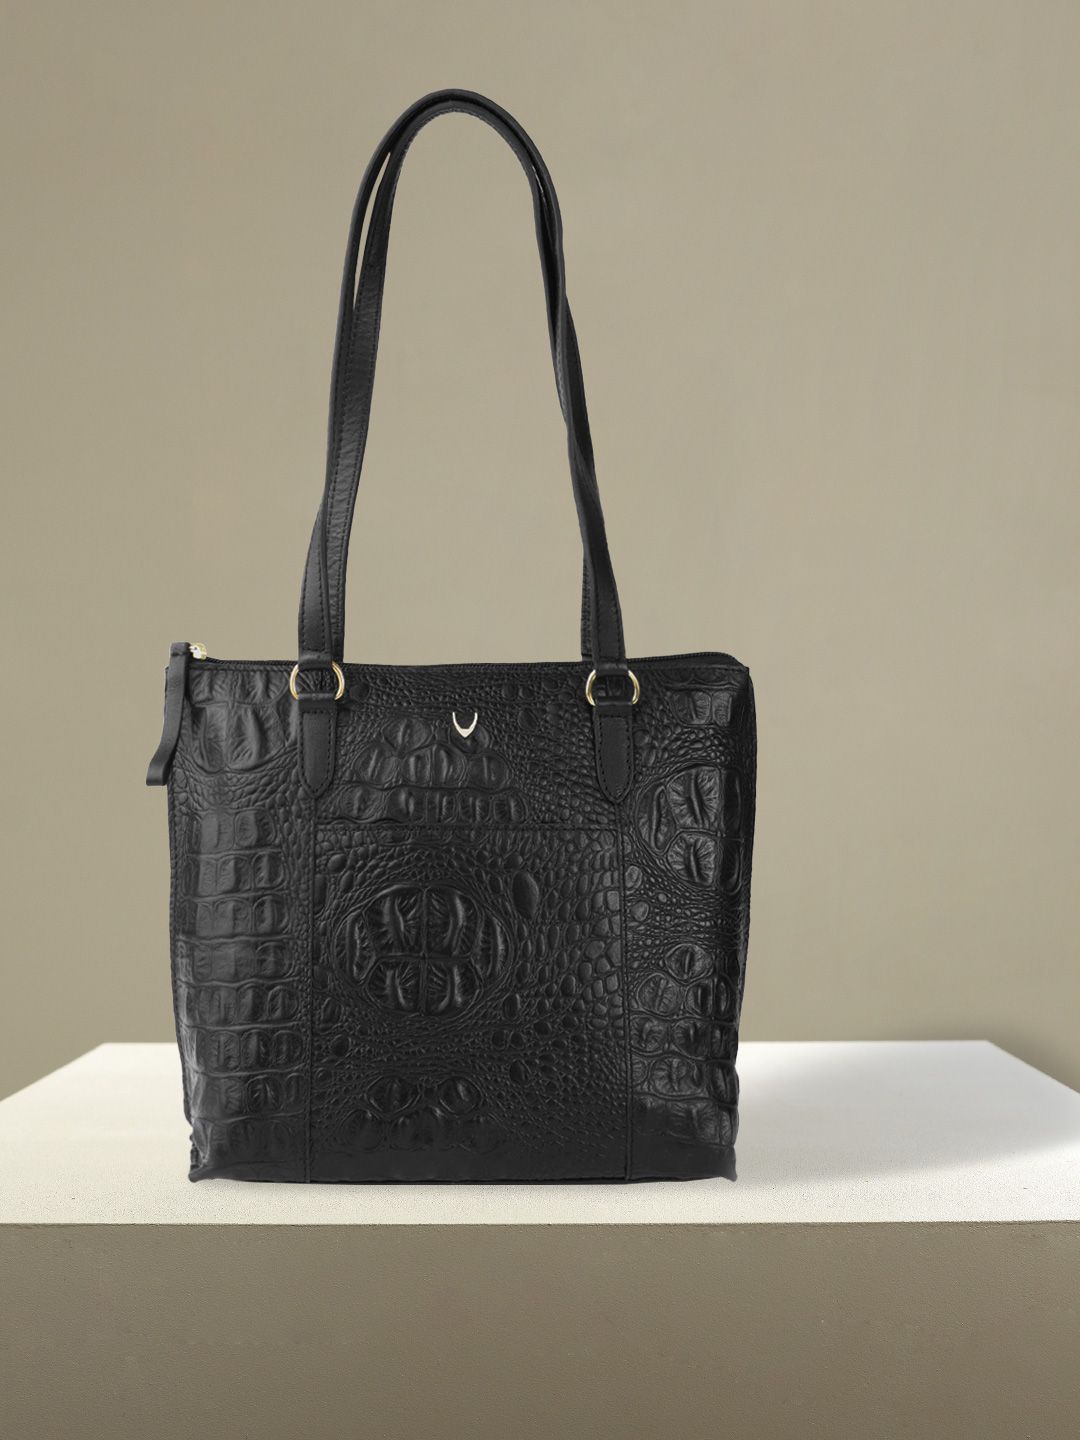 Hidesign Women Black Croc-Textured Leather Structured Shoulder Bag Price in India